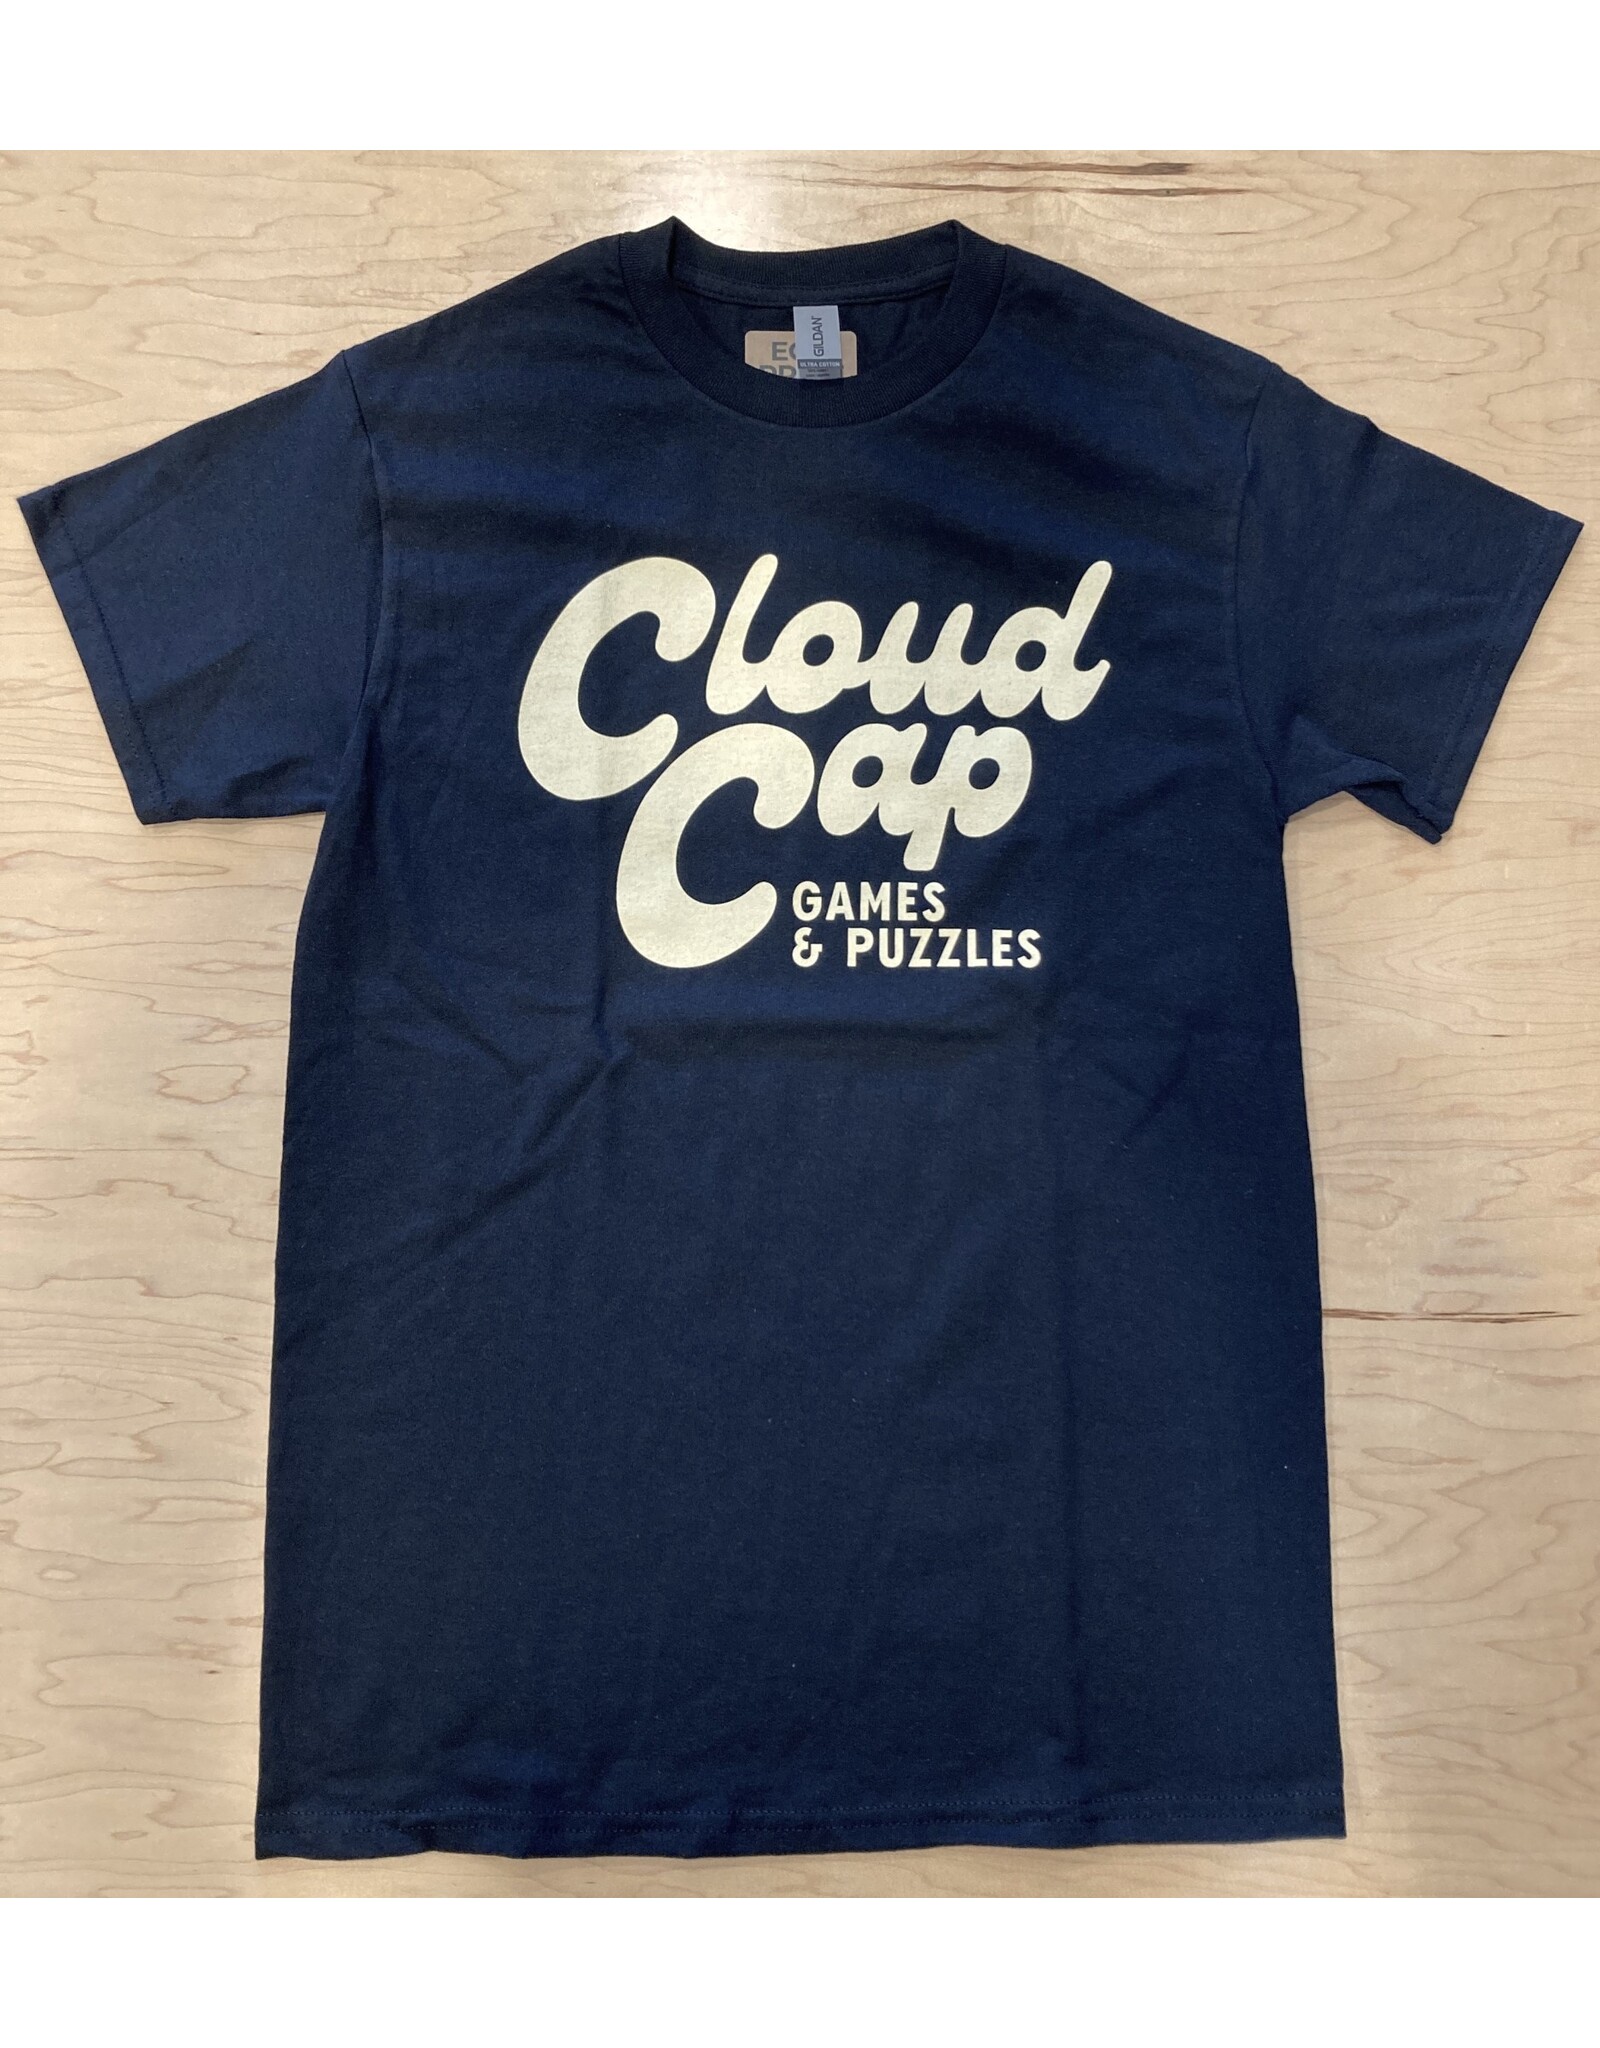 T-Shirt - Cloud Cap Logo - Black  - XL